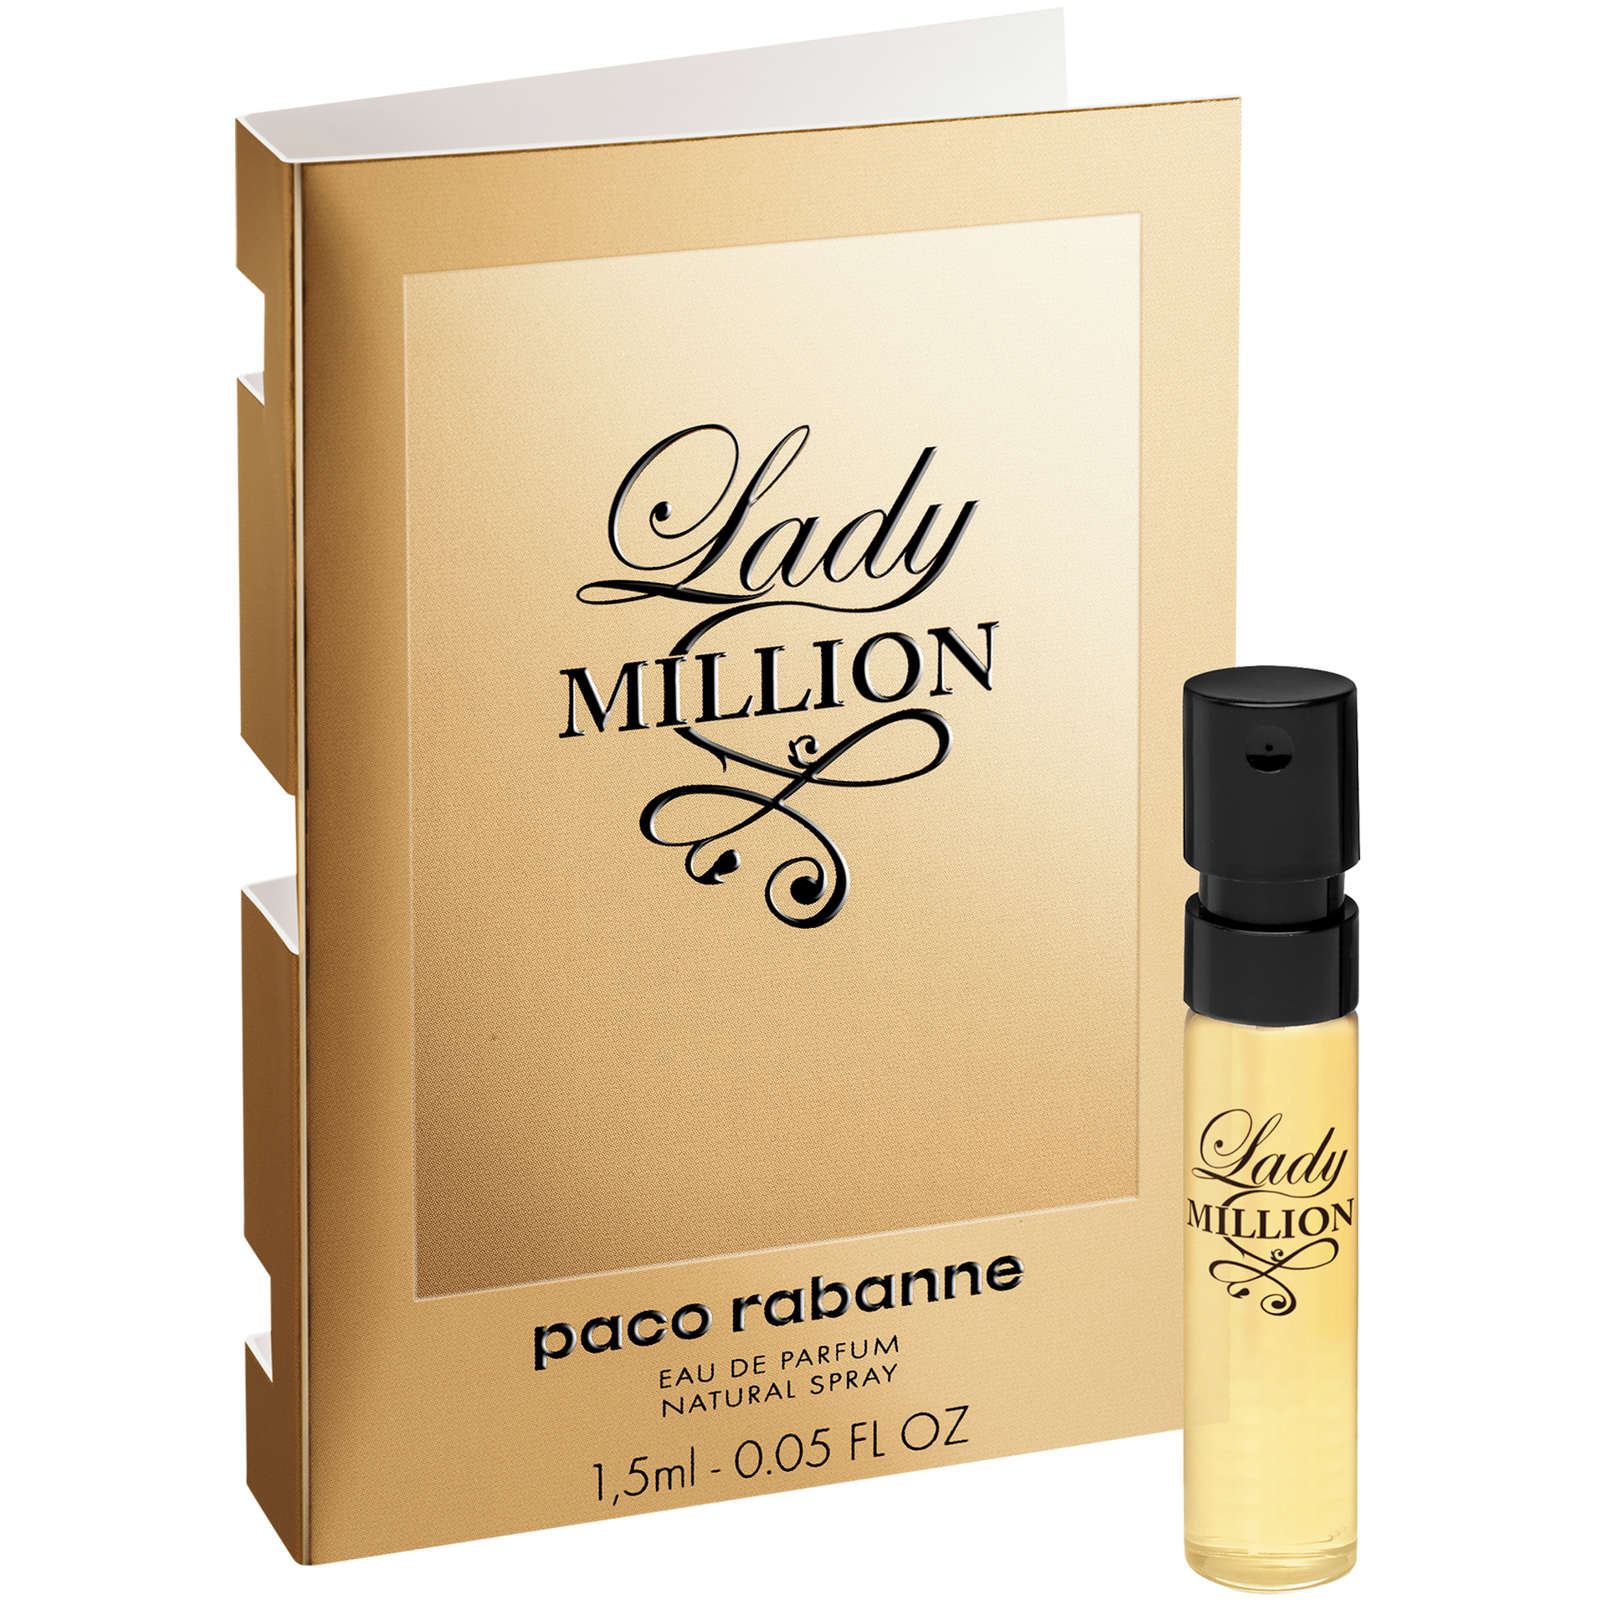 Paco Rabanne, Lady Million (Sample) | Fragrance samples, Fragrance